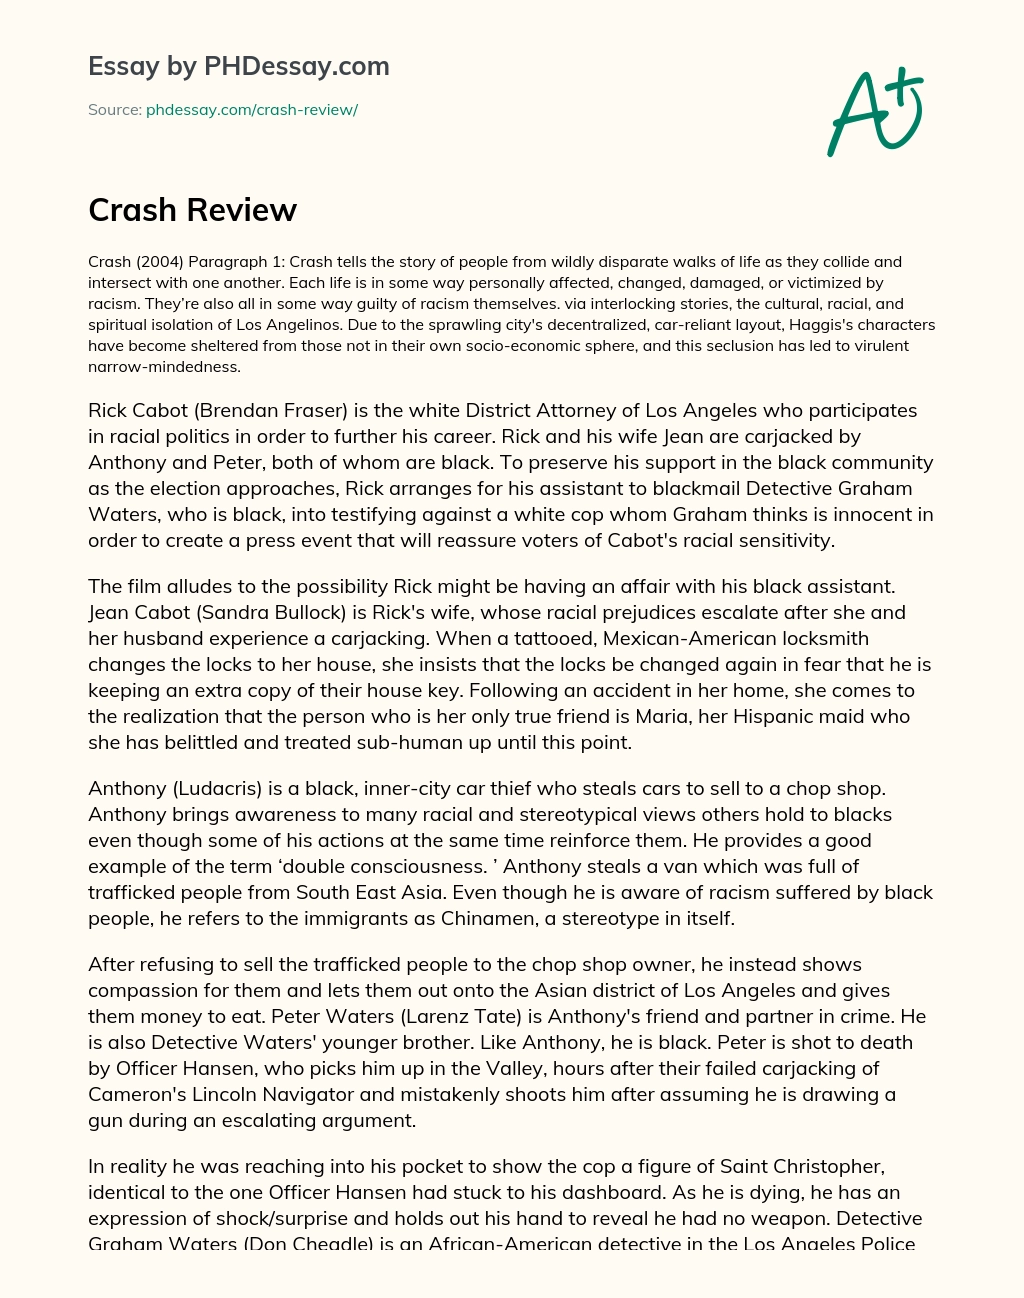 Crash Review essay